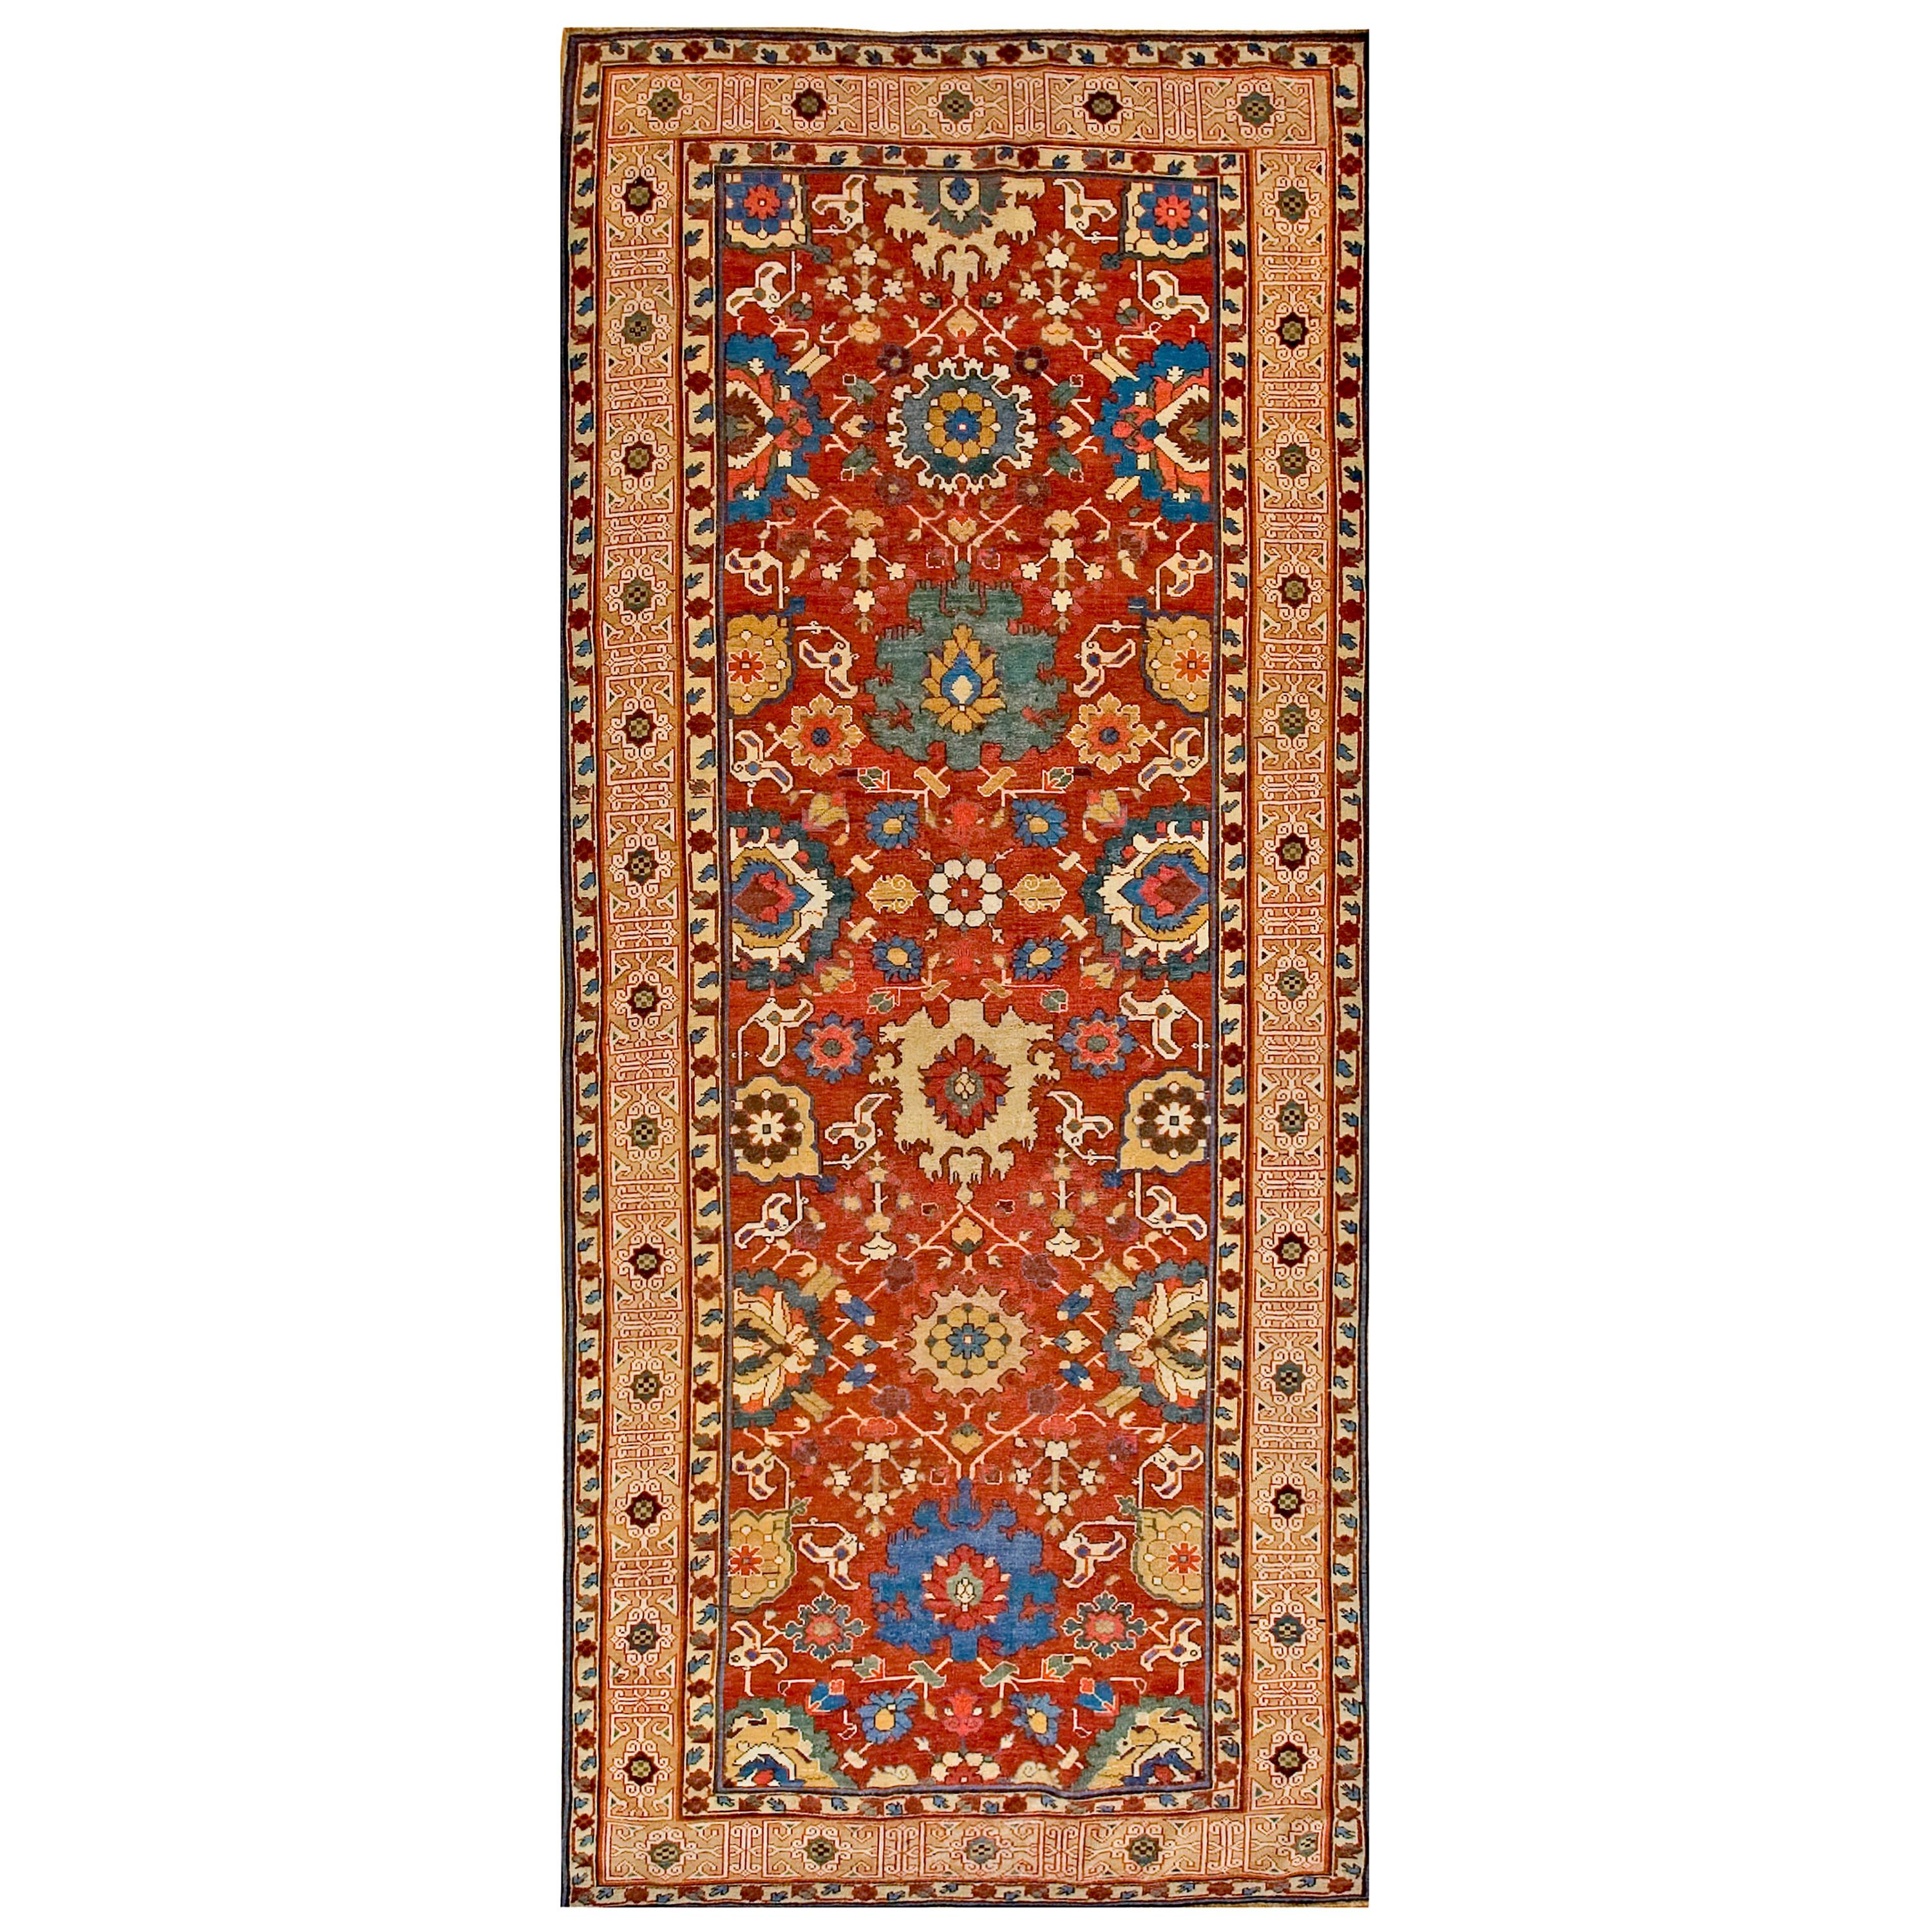 Early 19th Century Caucasian Harshang Kuba Carpet ( 4'10" x 11'10" - 147 x 361 ) For Sale